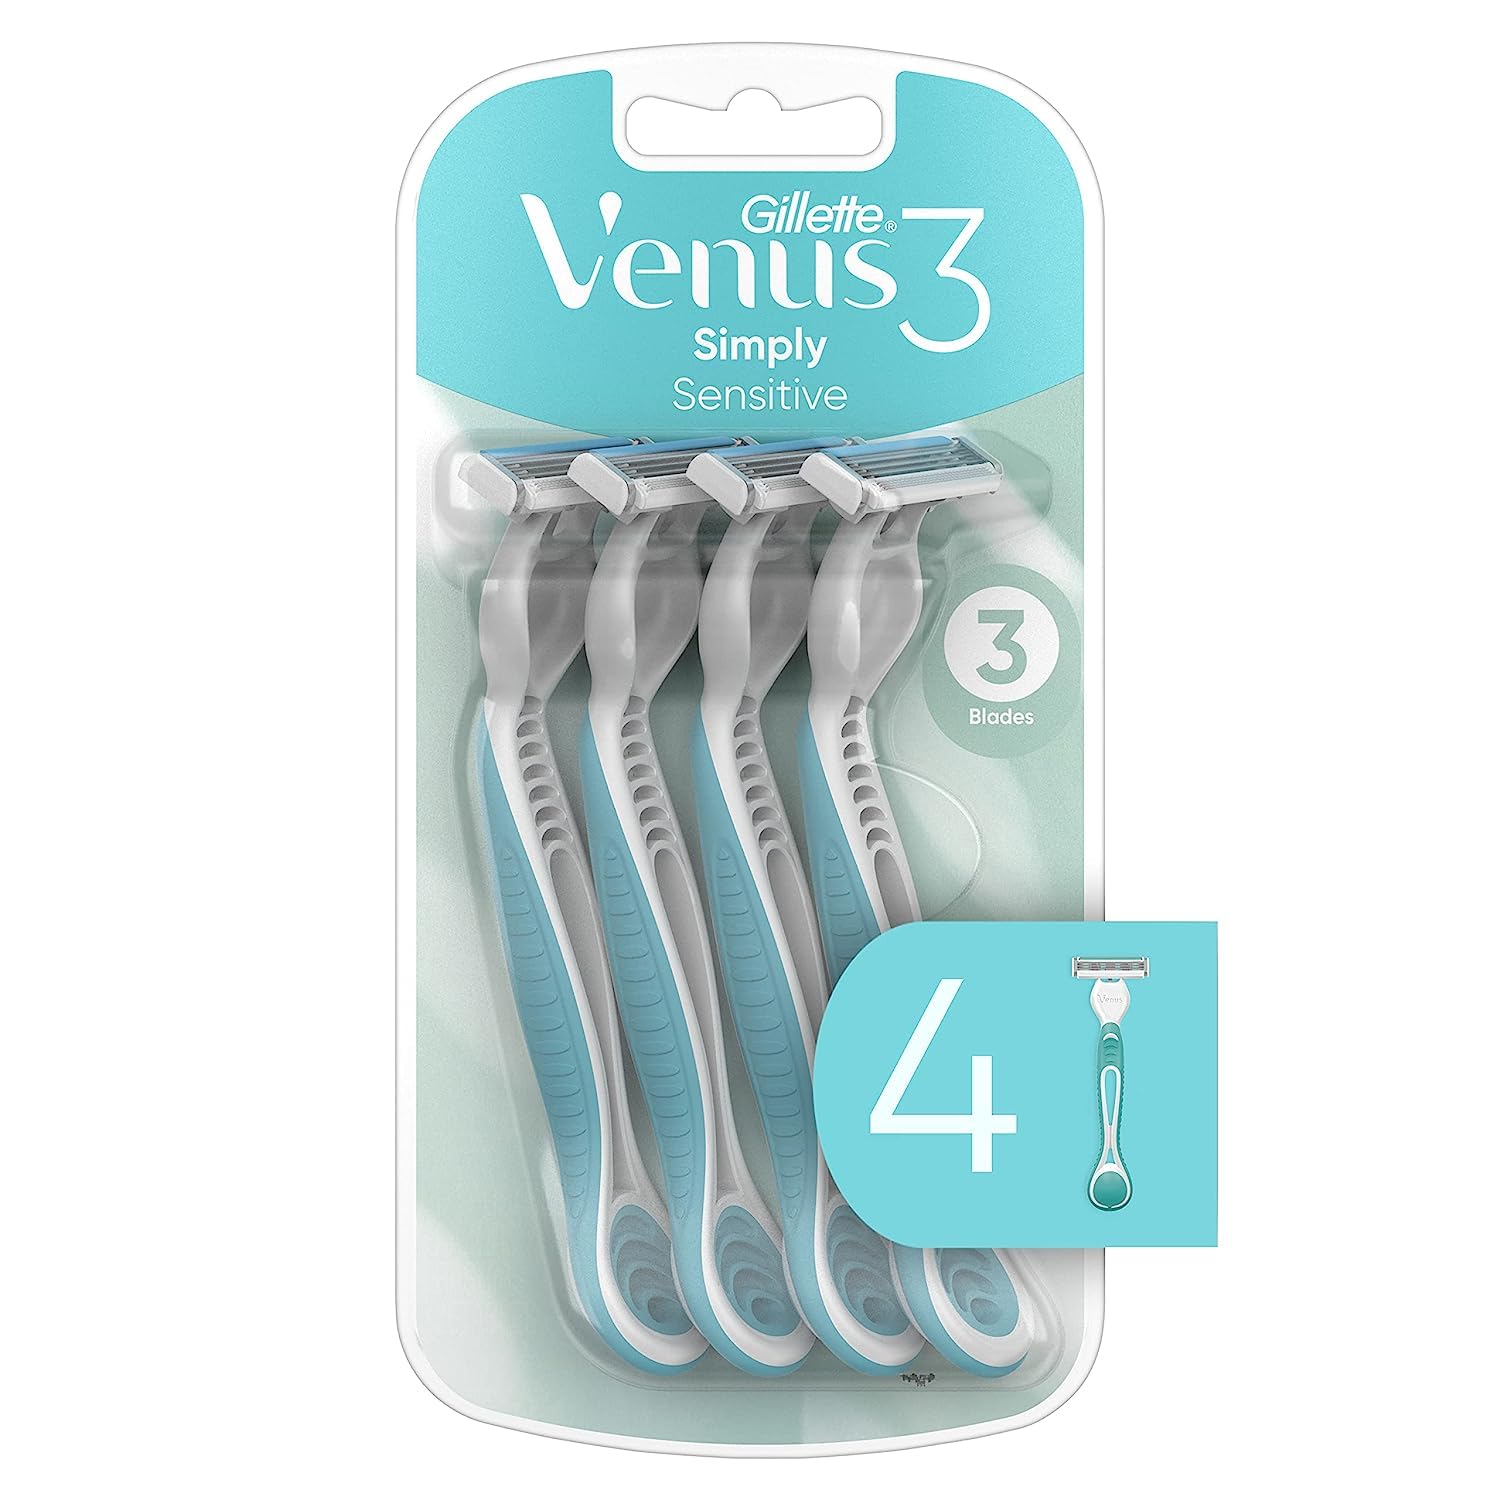 Gillette Venus Simply 3 Sensitive Women's Disposable Razors, Pack of 1 with 4 razors